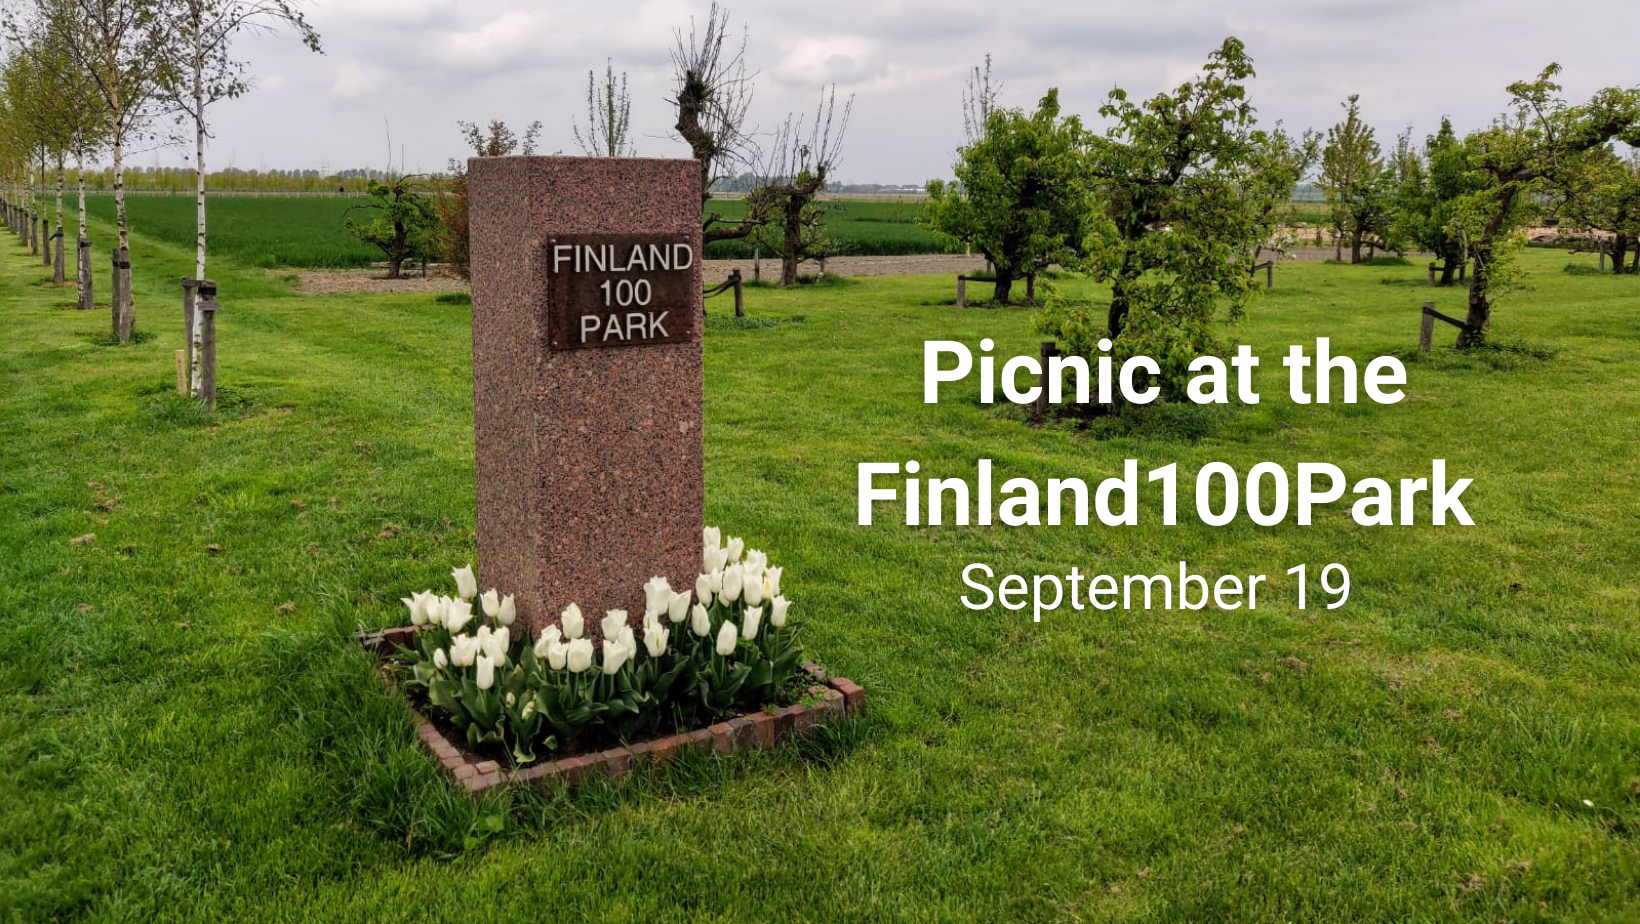 Picnic at the Finland100Park